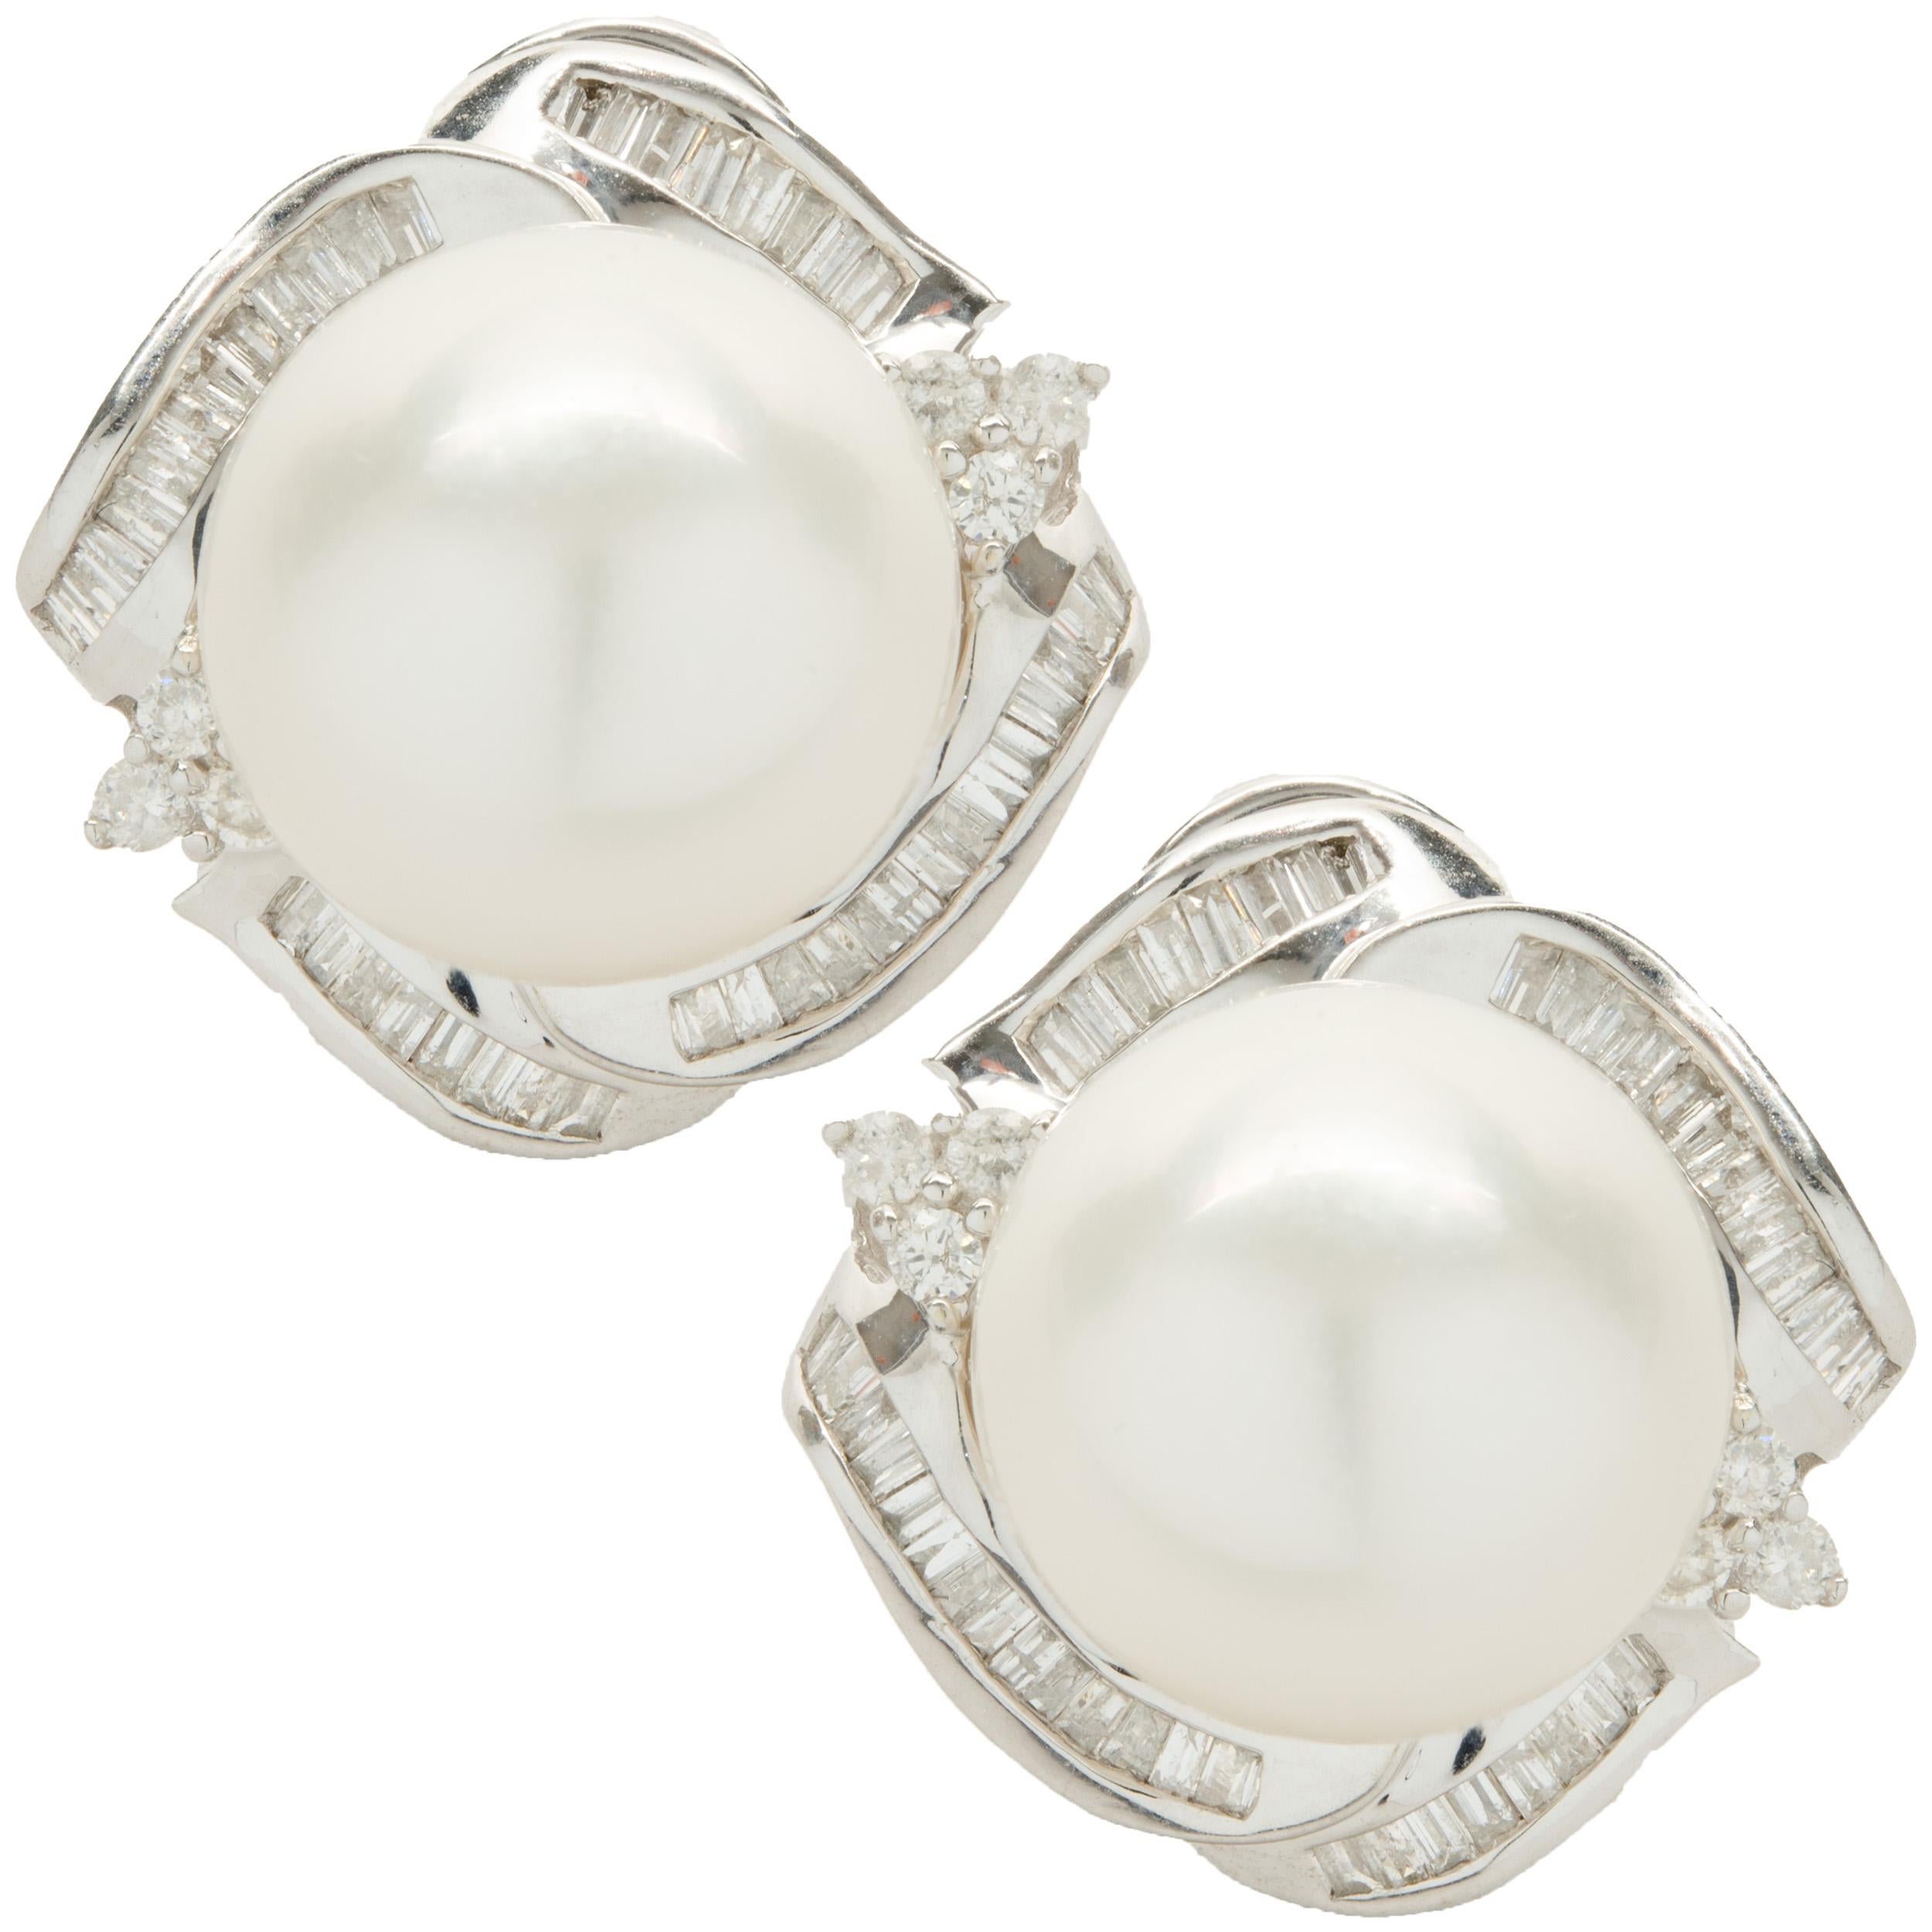 14 Karat White Gold South Sea Pearl and Diamond Circle Earrings